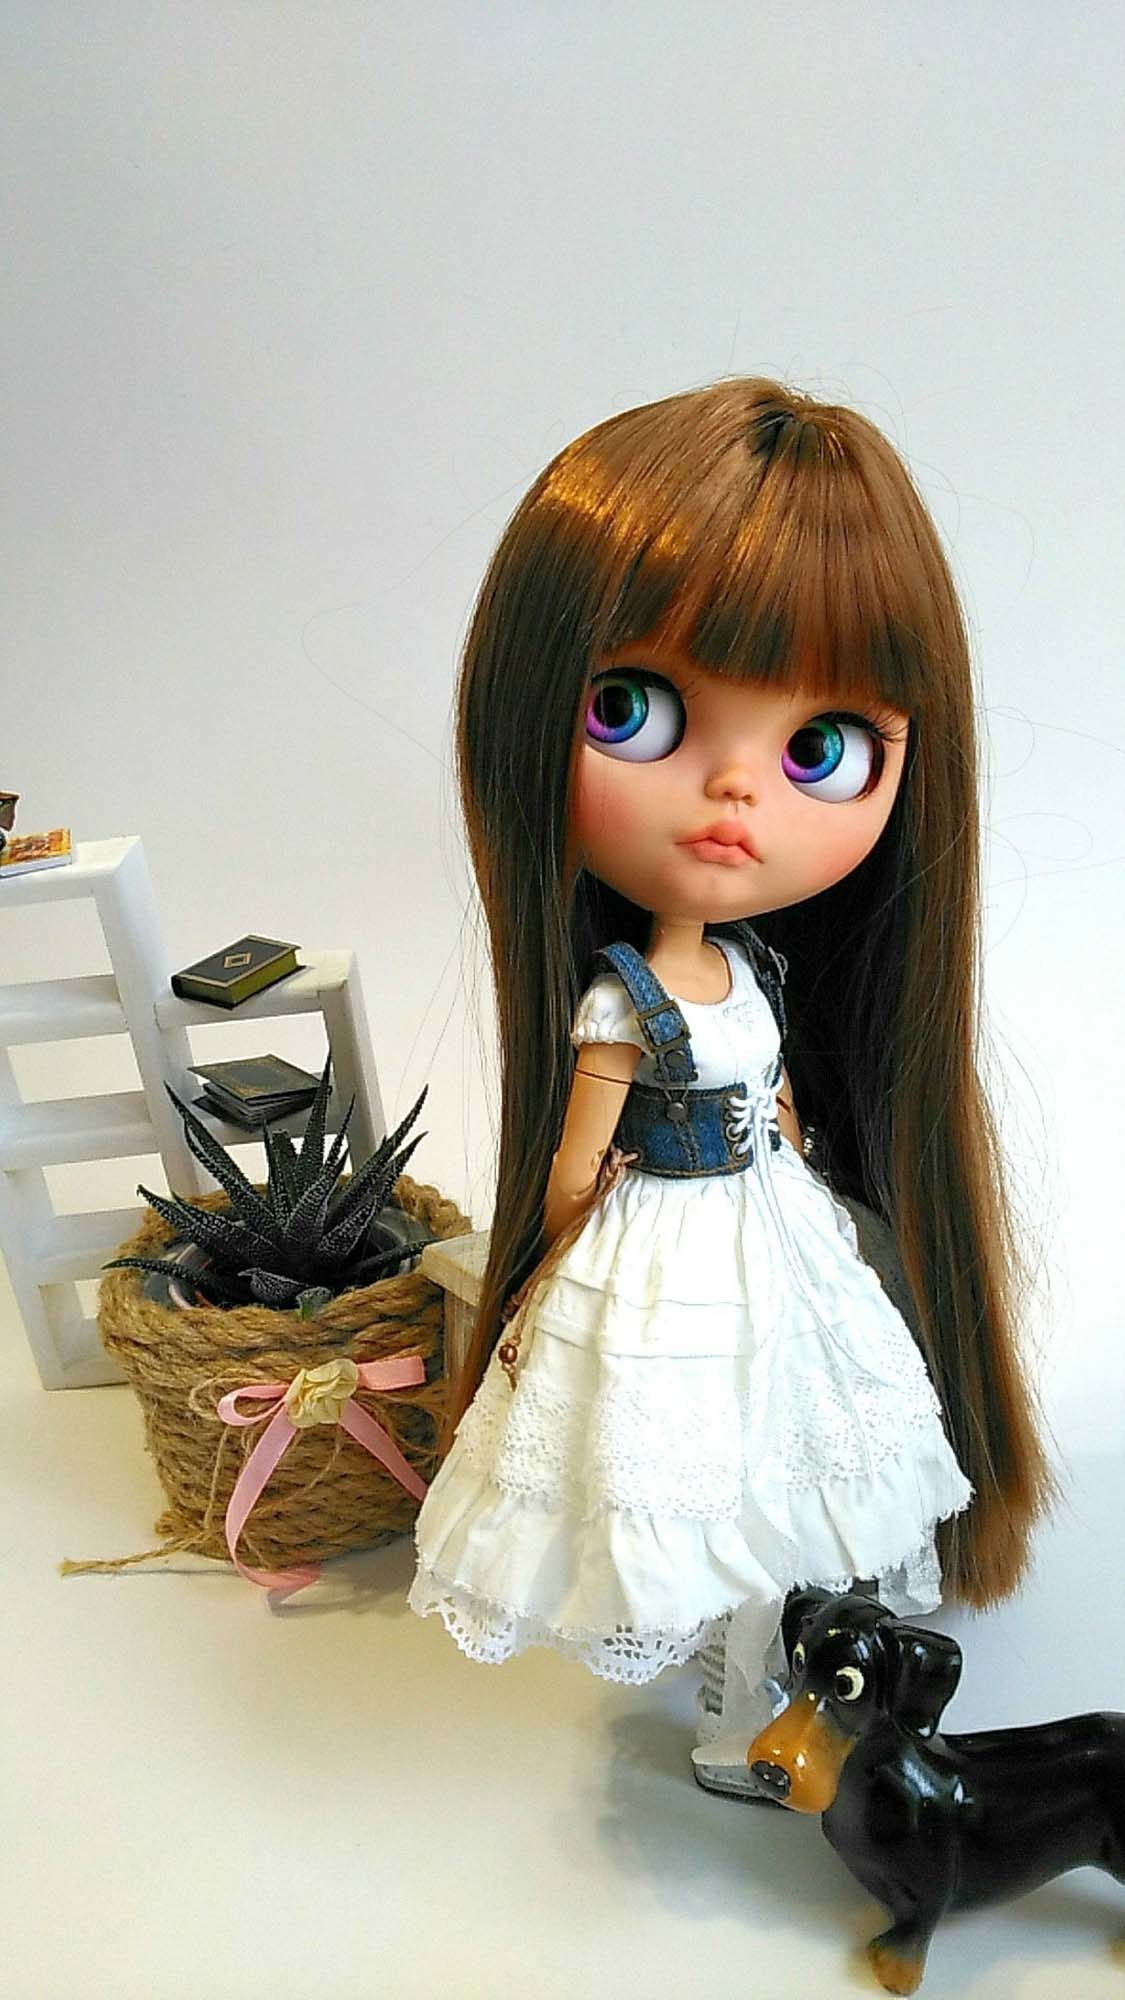 Blytheclub - Blythe doll customizer profile page at DollyCustom